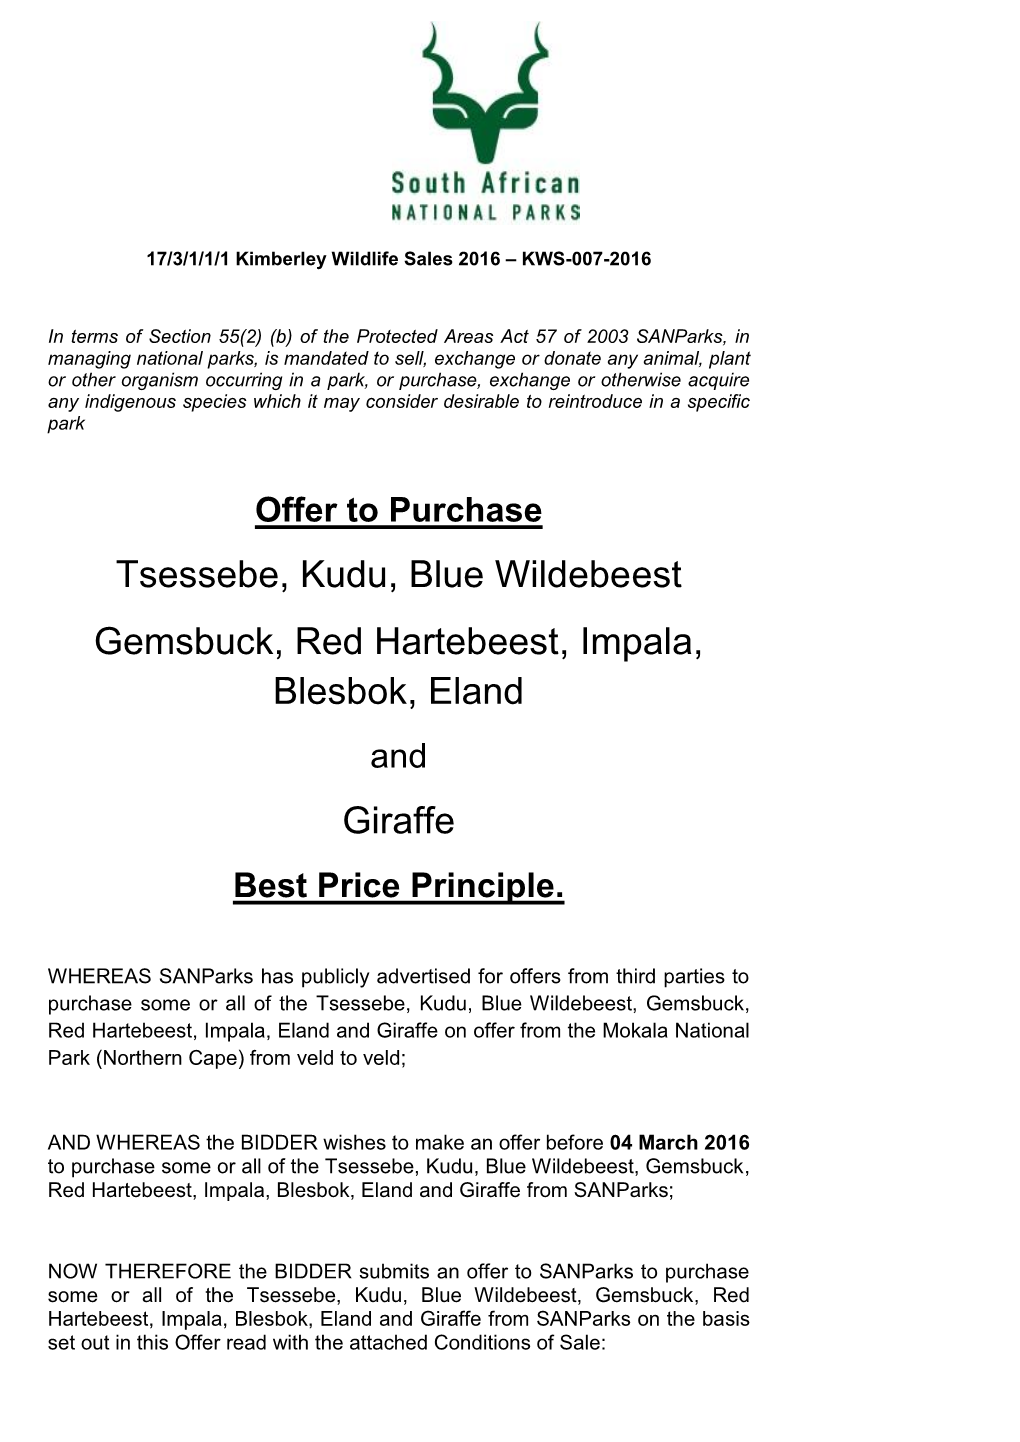 Tsessebe, Kudu, Blue Wildebeest Gemsbuck, Red Hartebeest, Impala, Blesbok, Eland and Giraffe Best Price Principle